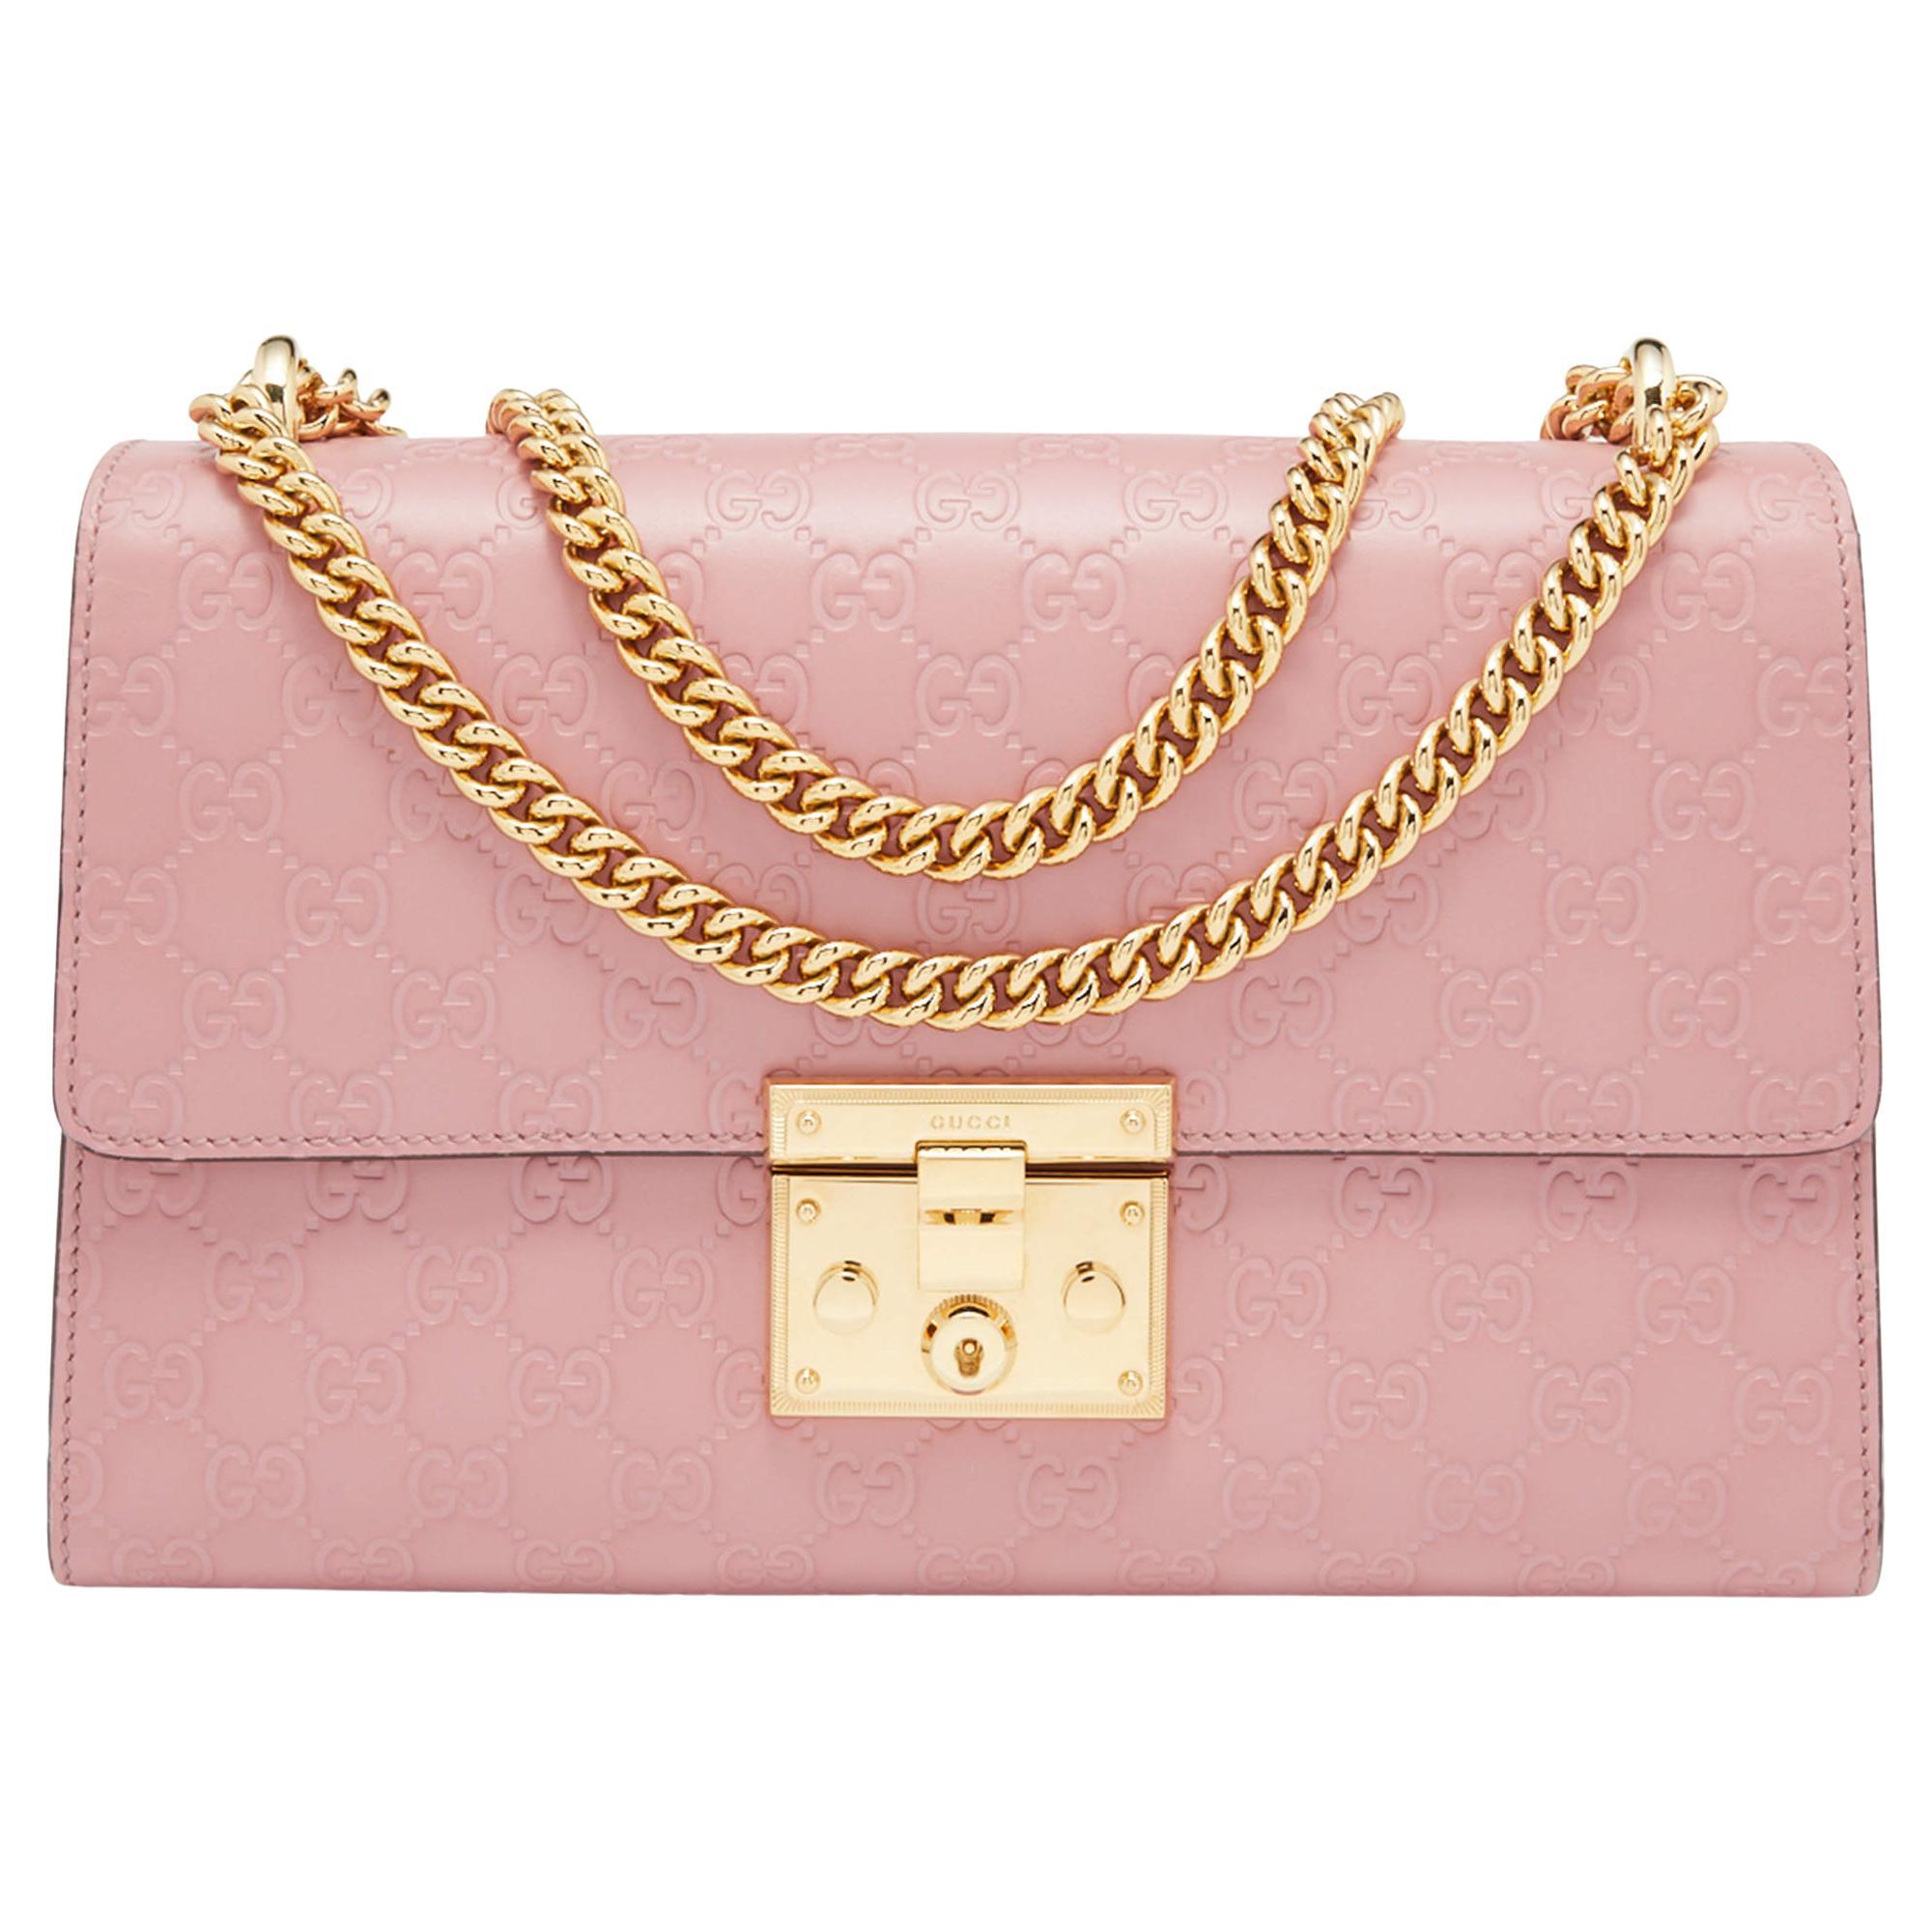 Gucci Pink Guccissima Leather Medium Padlock Shoulder Bag